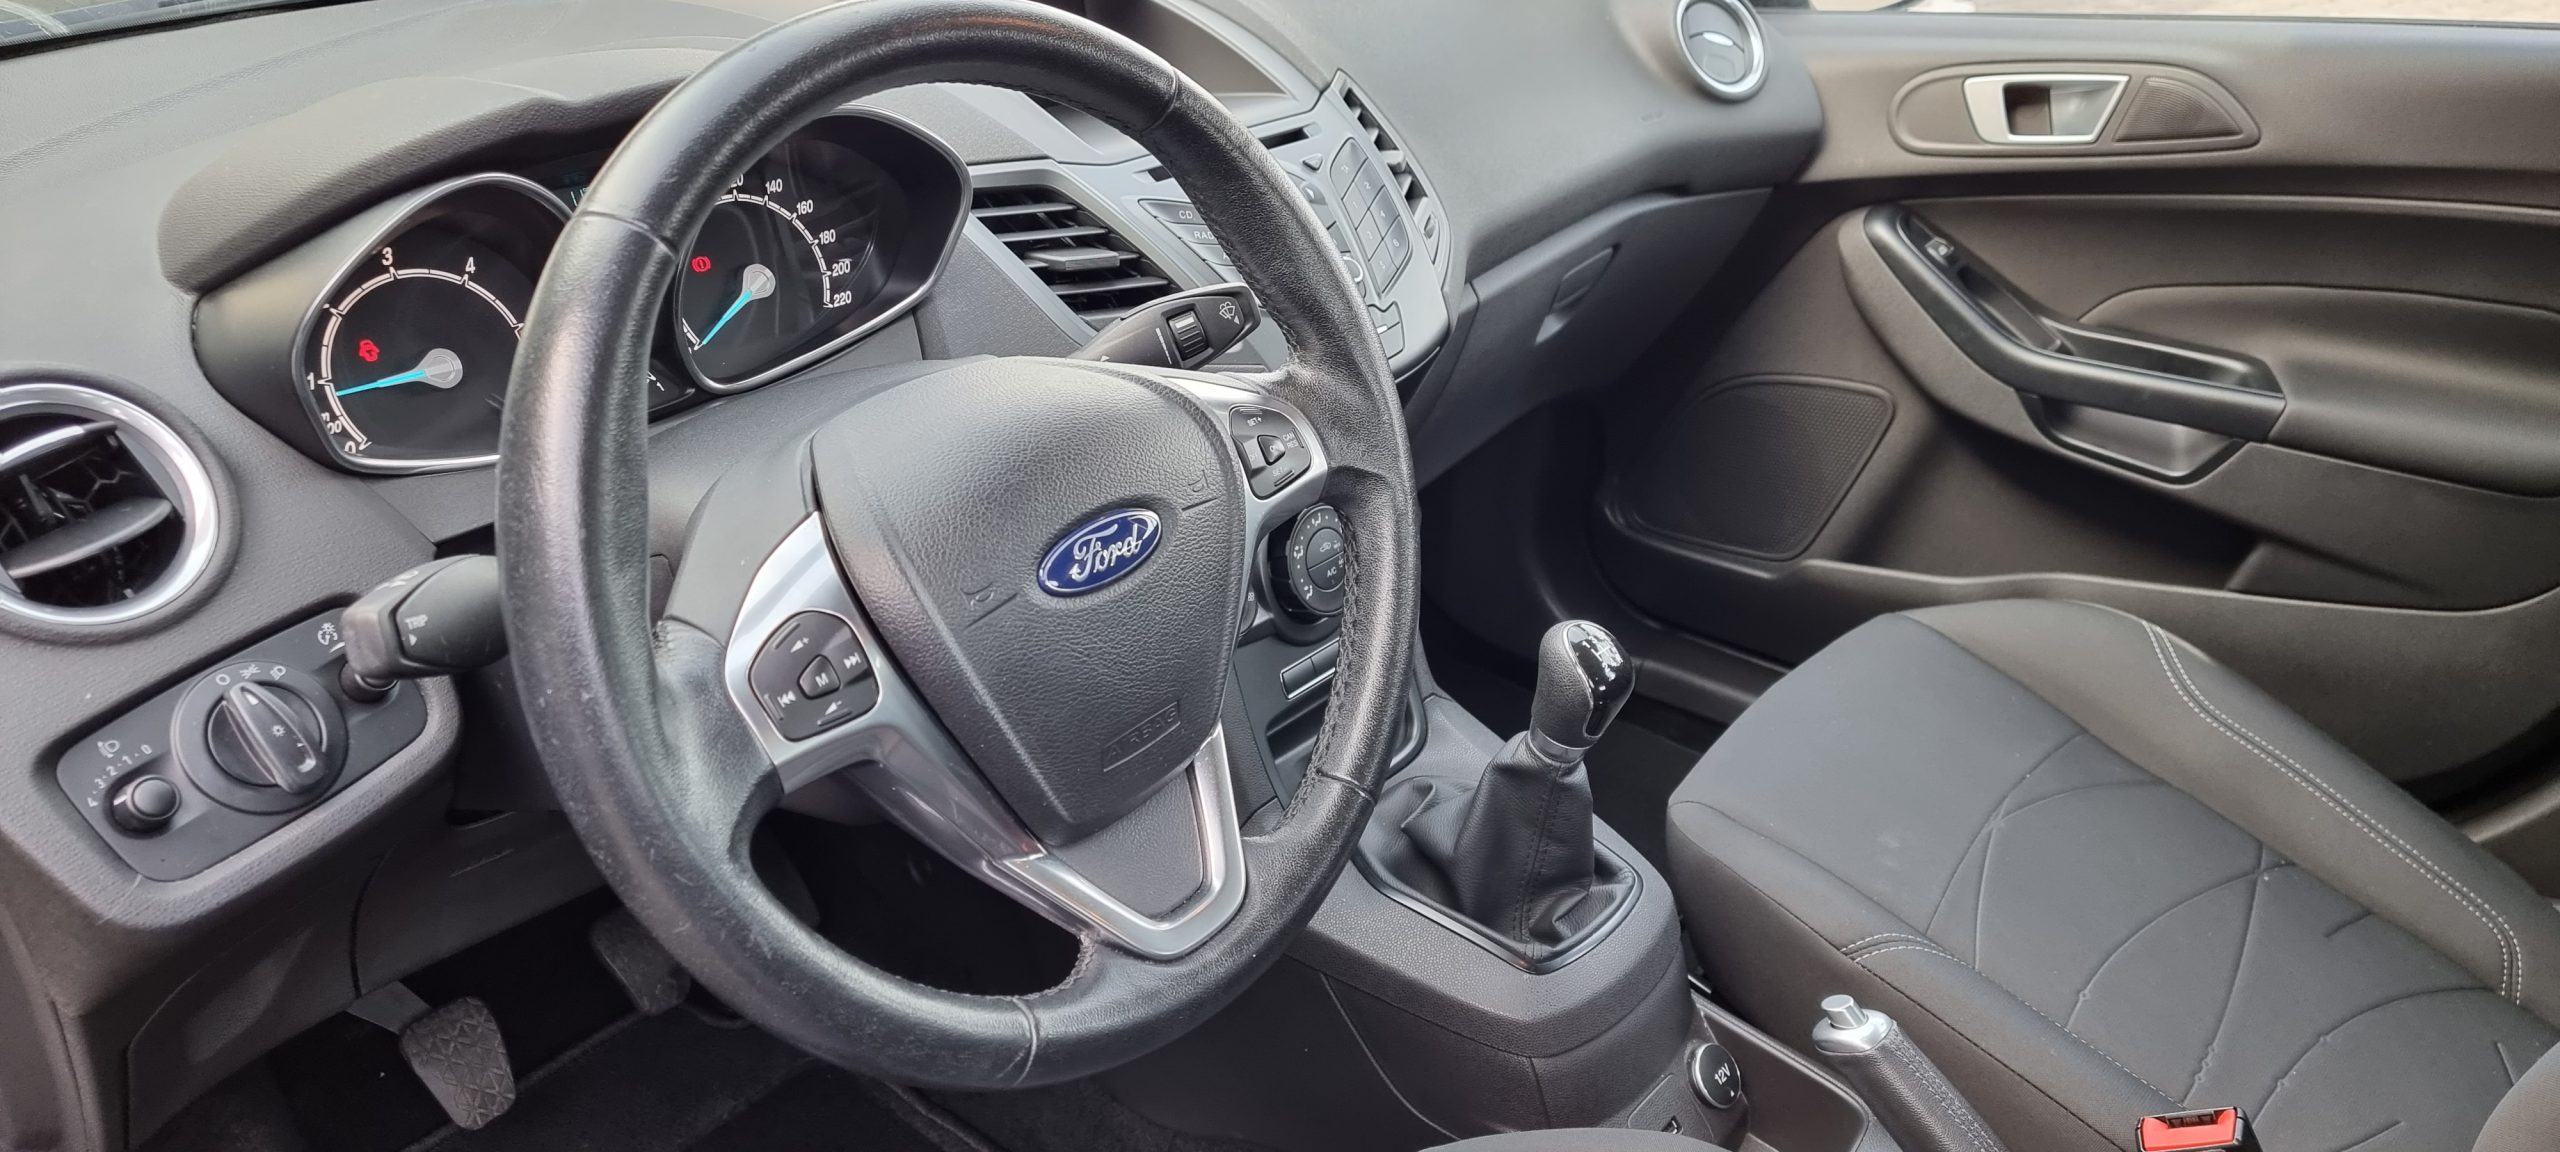 Ford Fiesta 1.5 TDCI